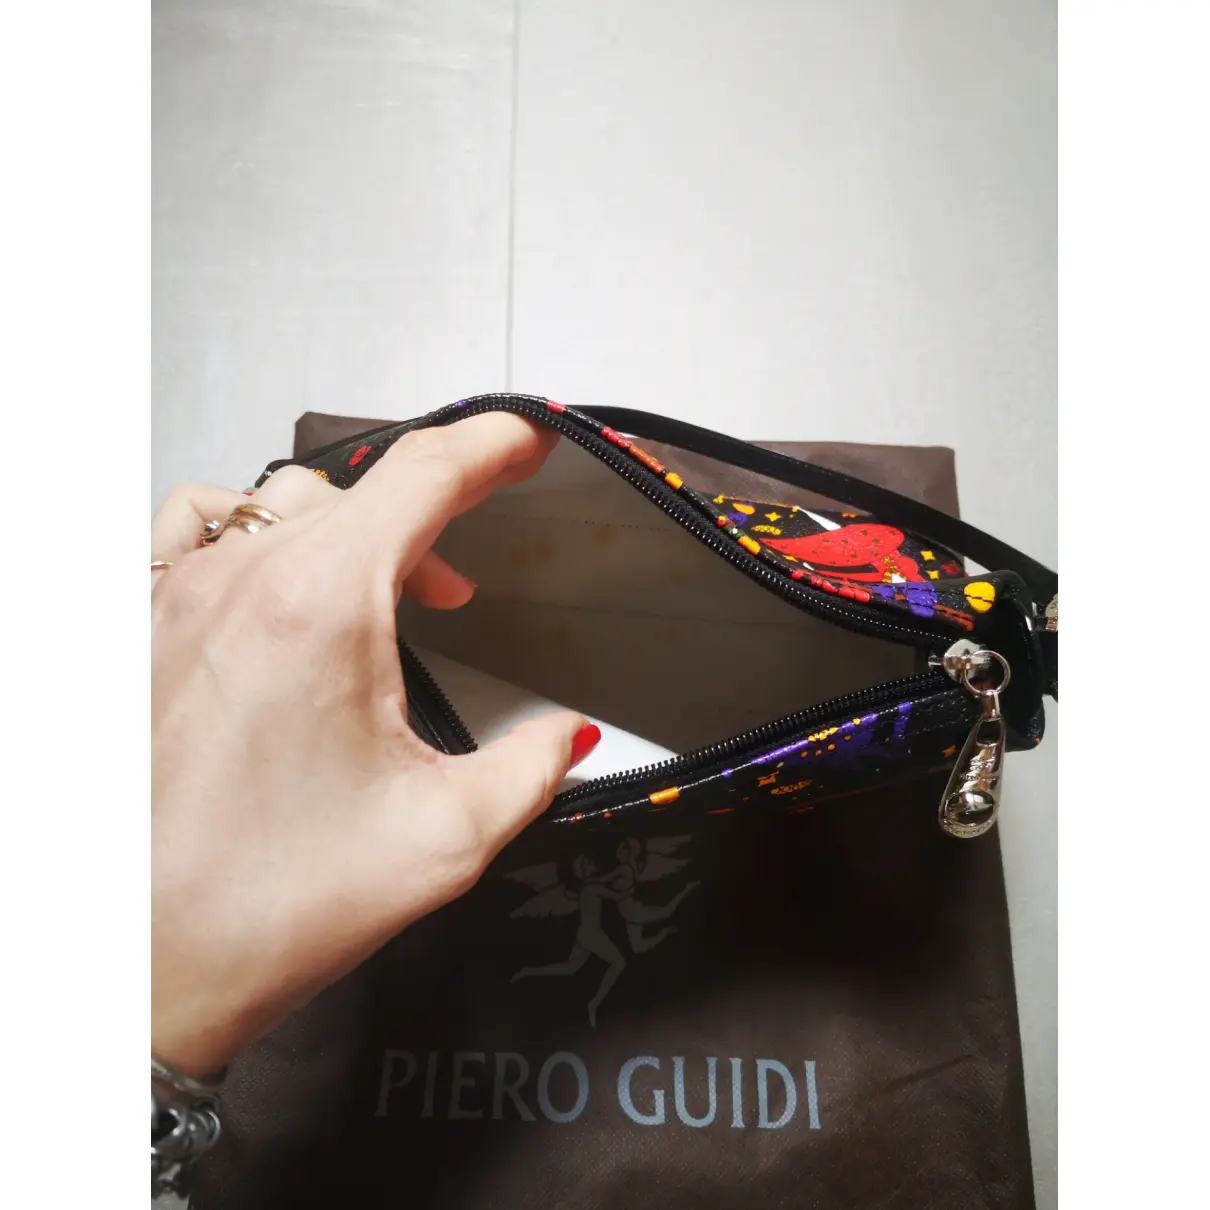 Leather handbag PIERO GUIDI